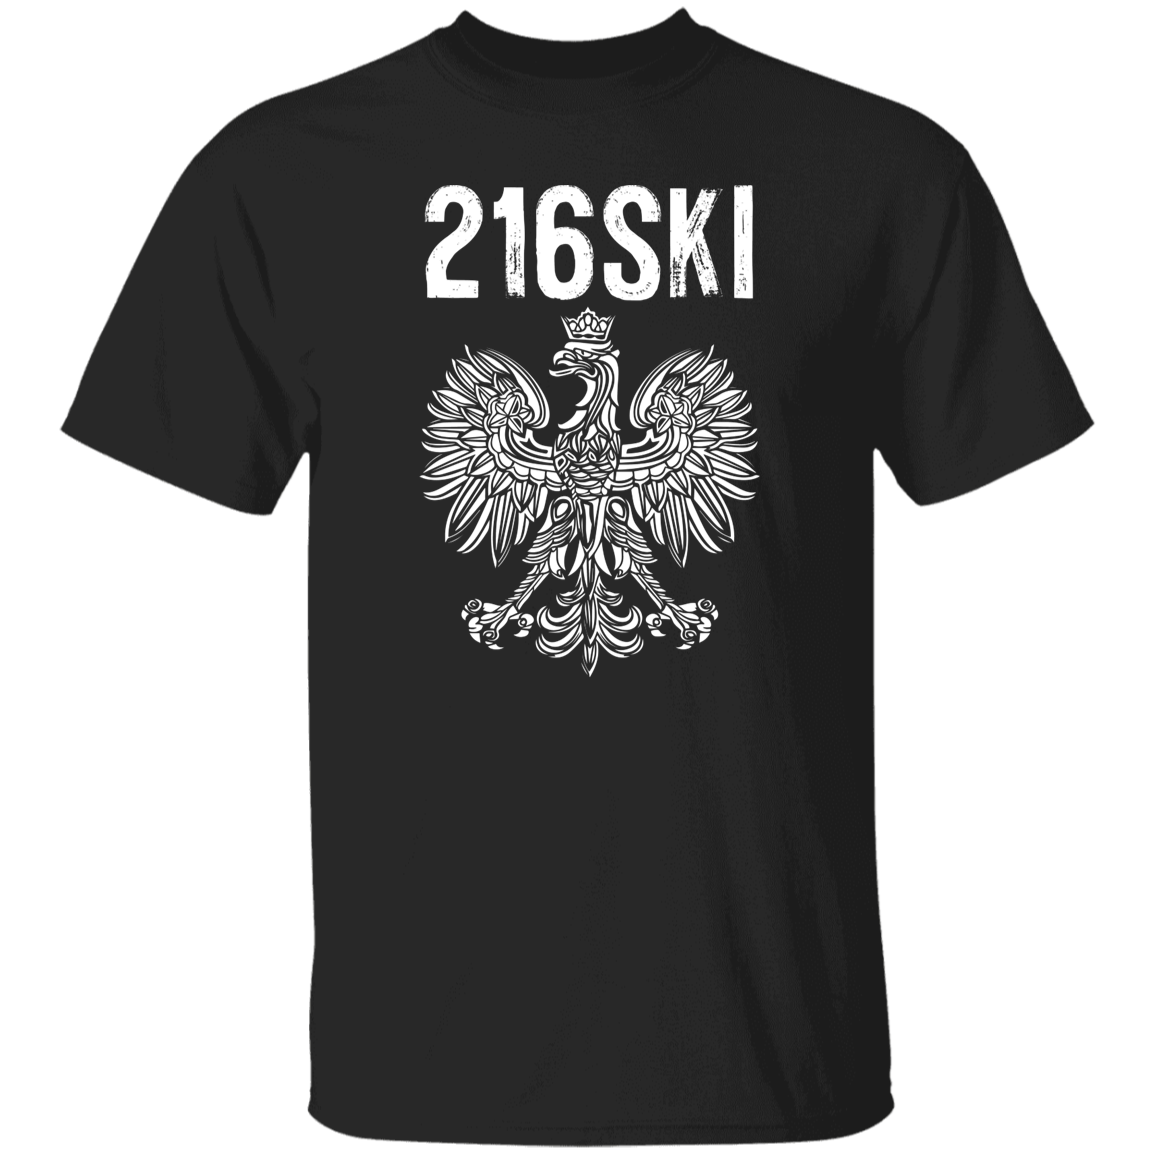 216SKI Cleveland Ohio Polish Pride Apparel CustomCat G500 5.3 oz. T-Shirt Black S